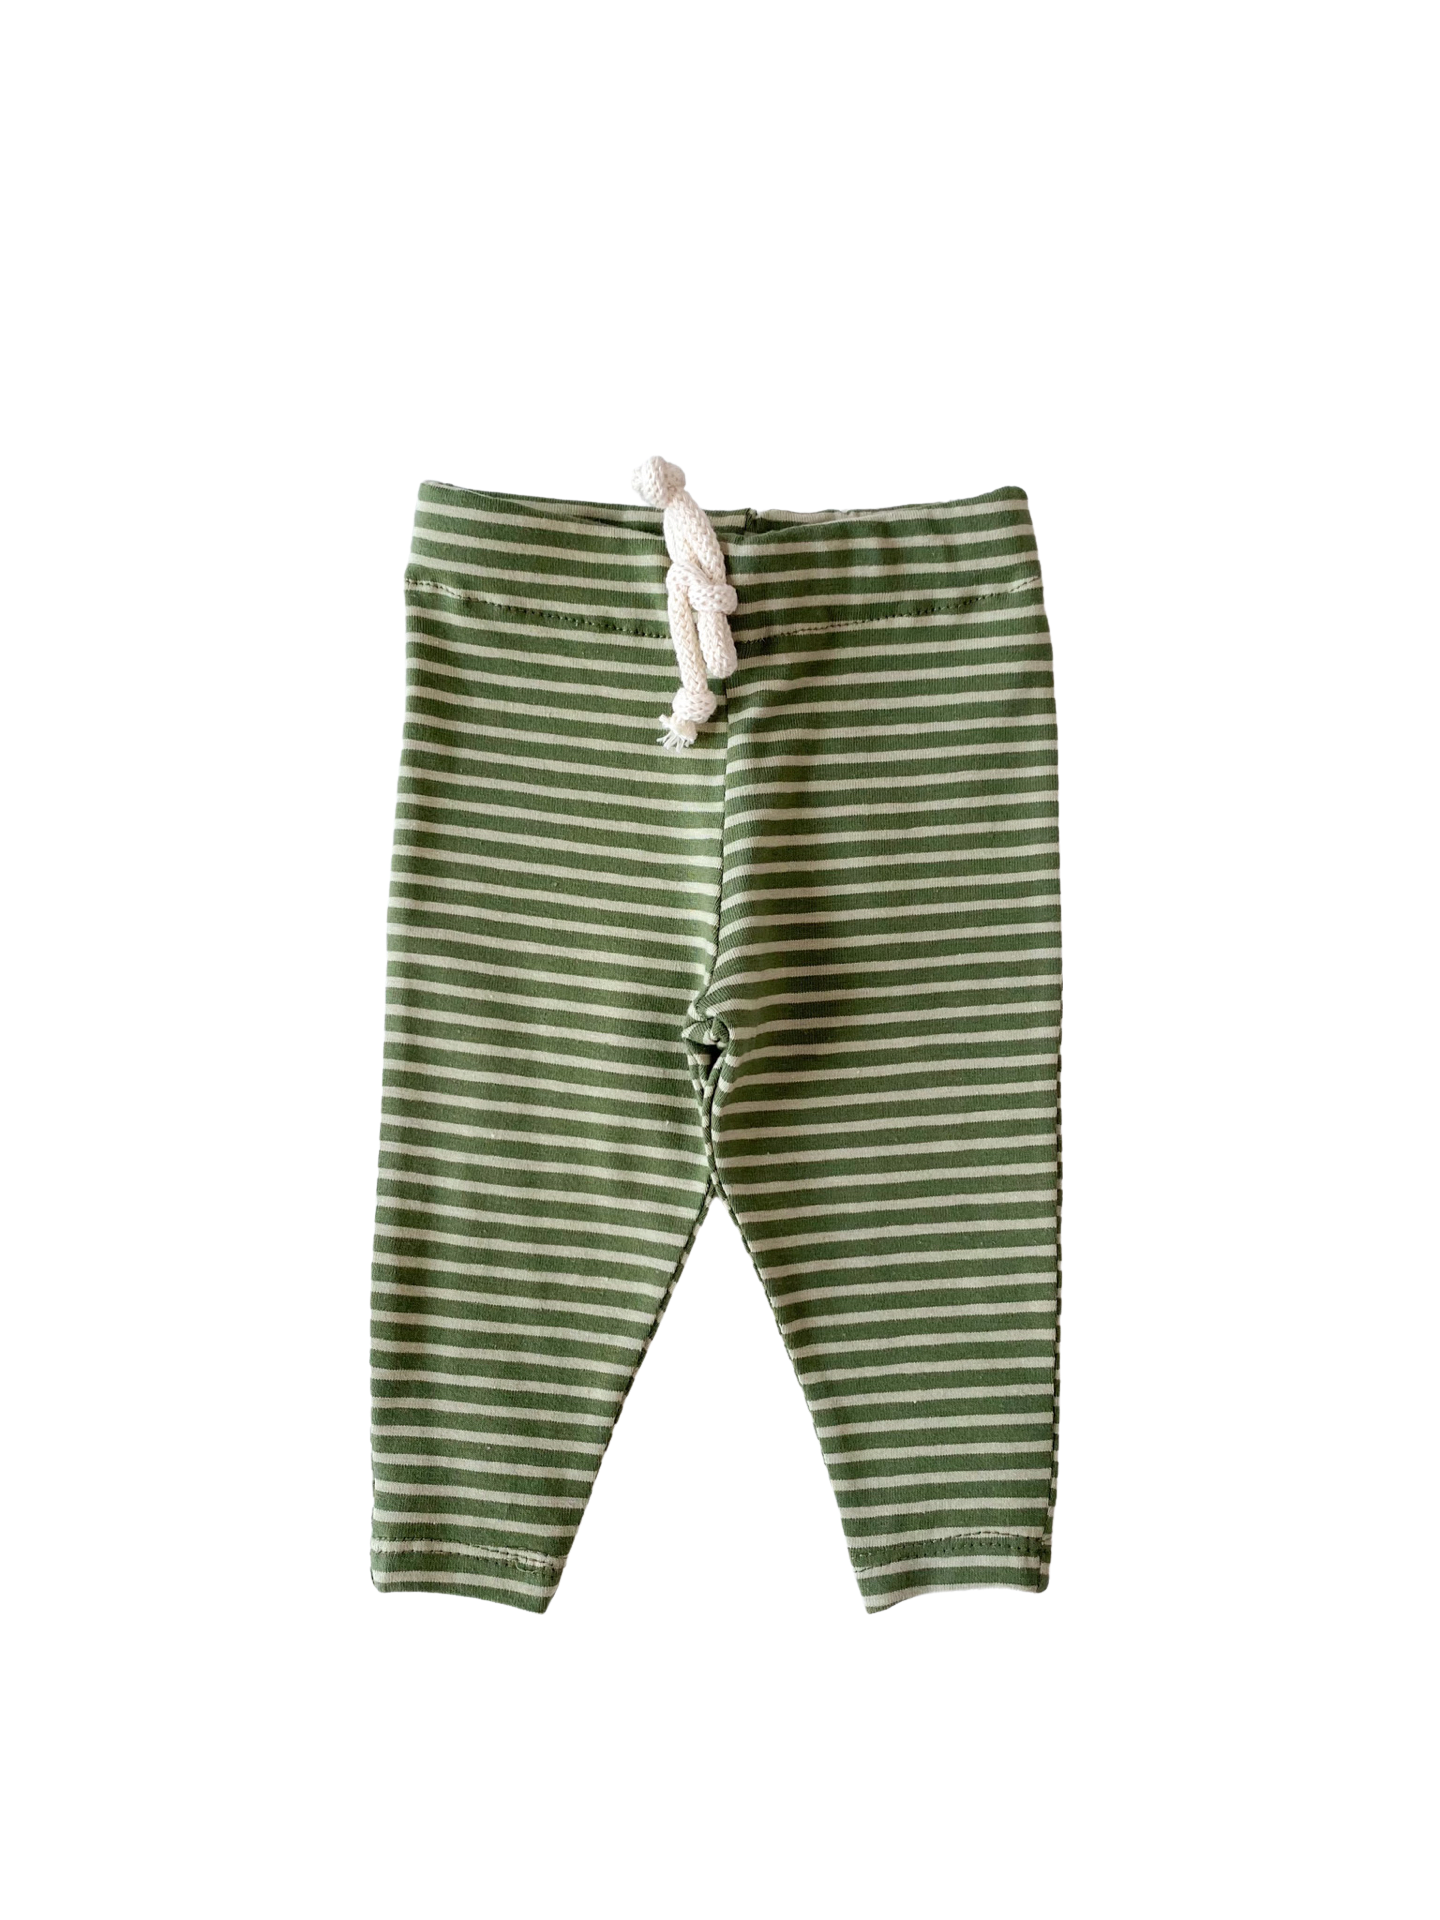 Kids leggings / olive thin stripes